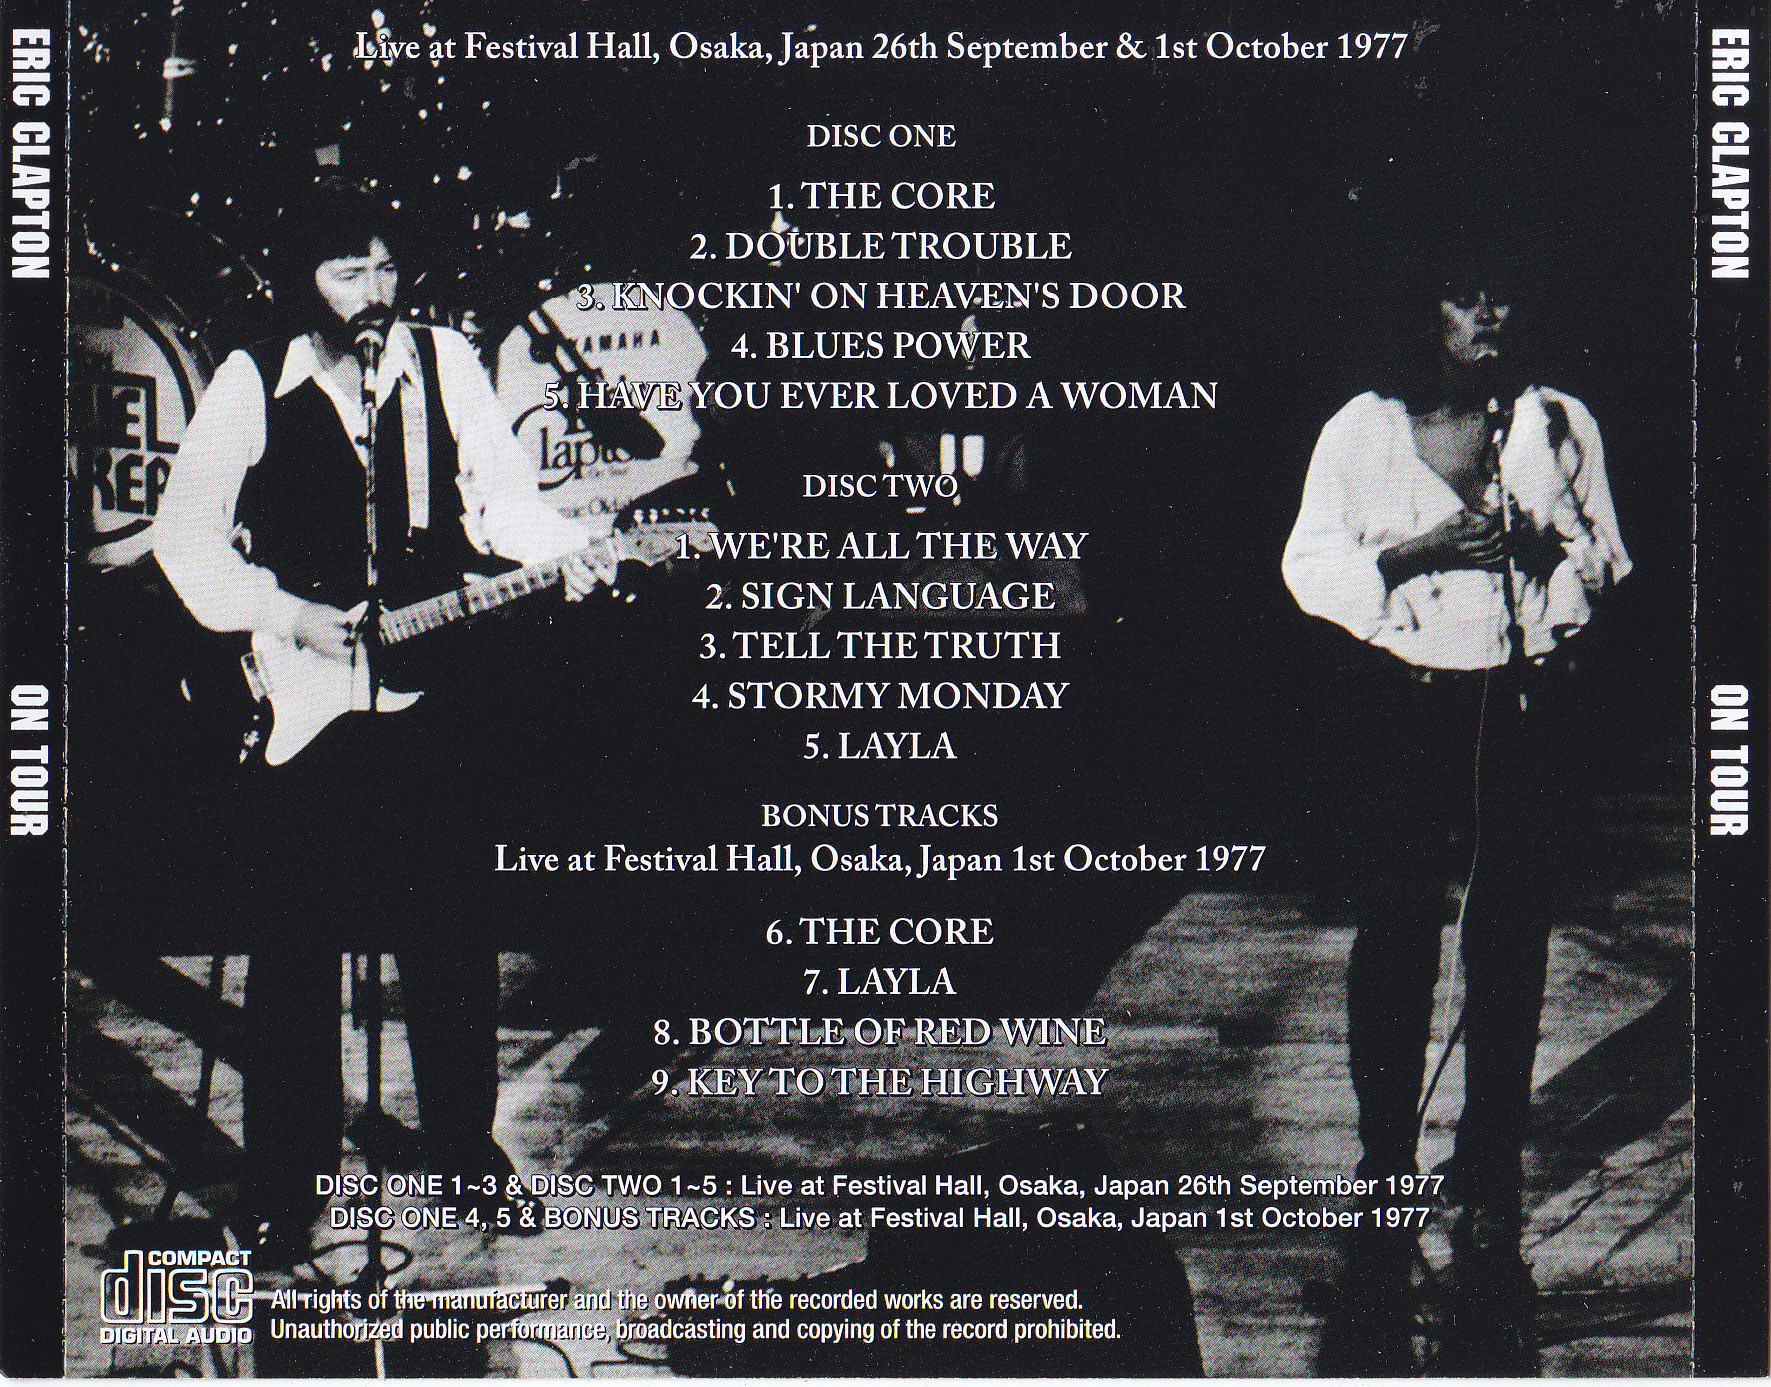 Eric Clapton / On Tour / 2CD – GiGinJapan